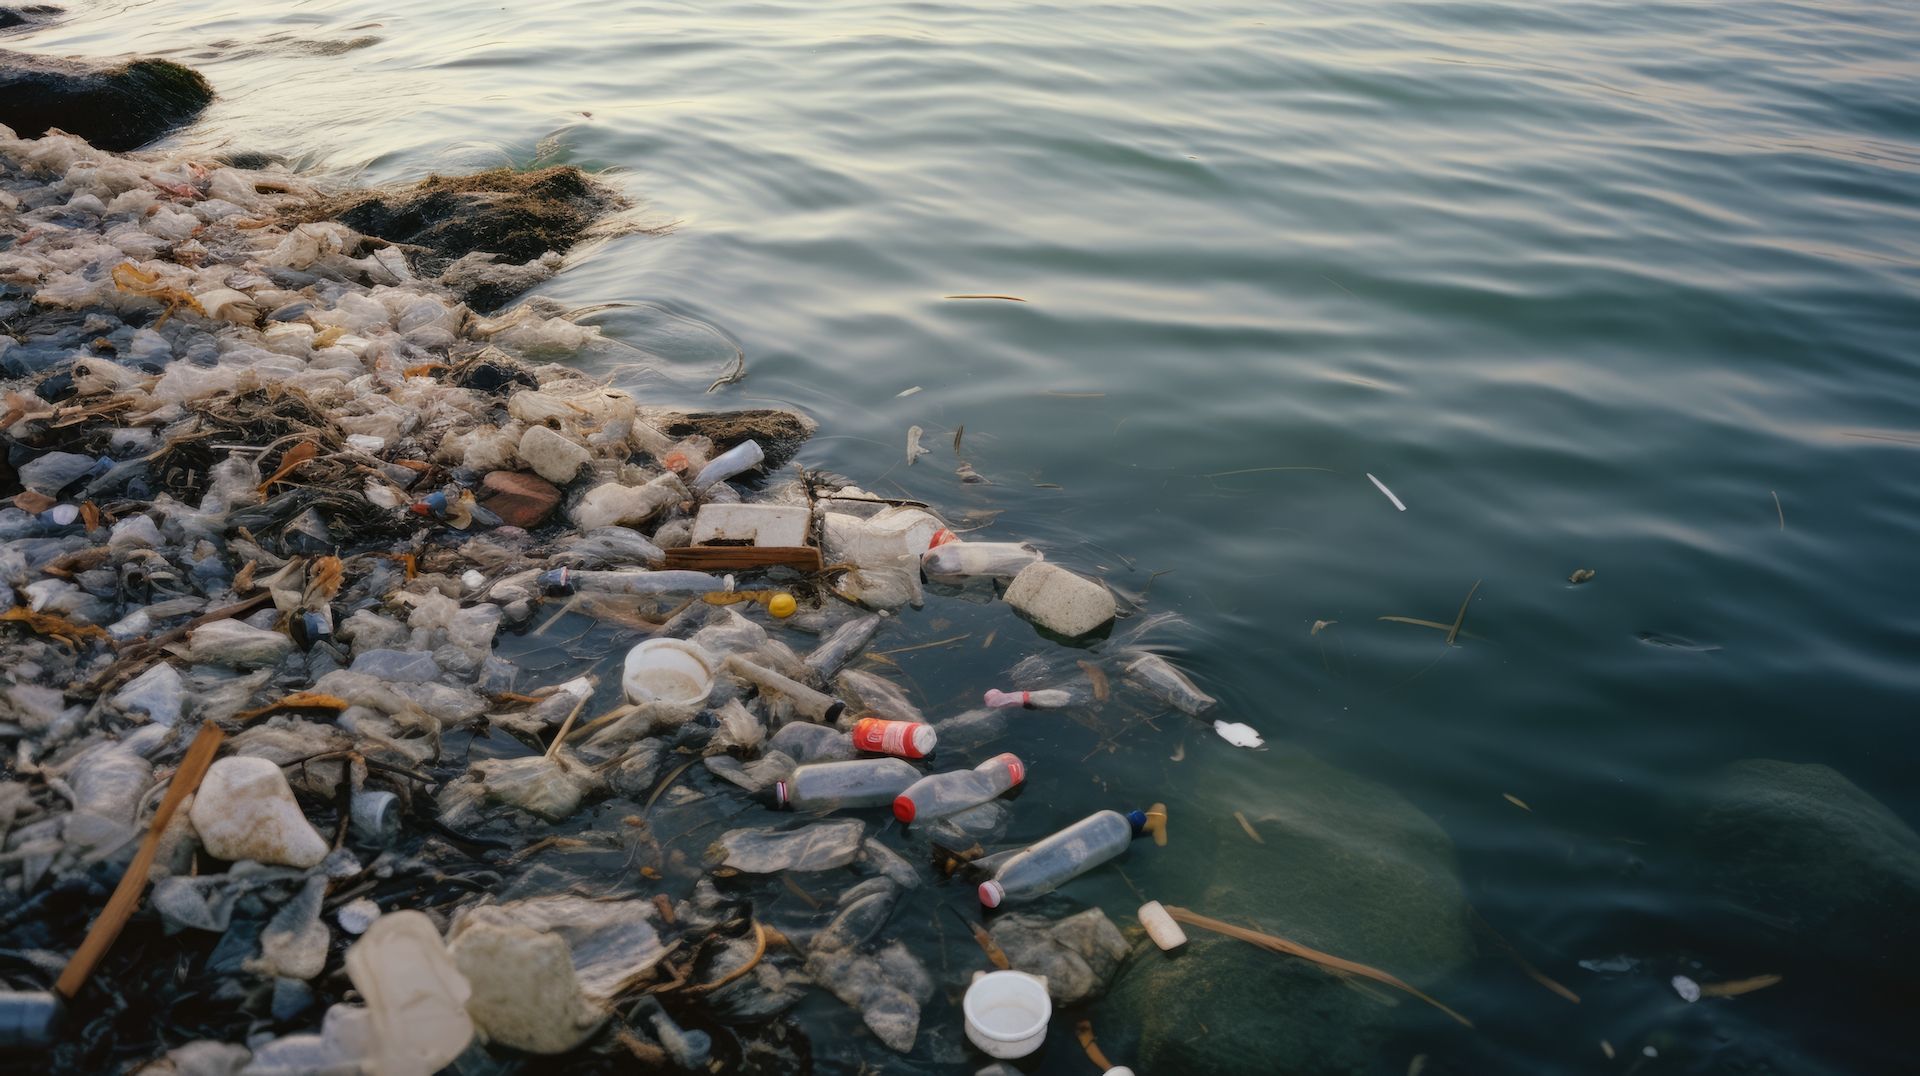 big-pile-plastic-garbage-sea-environmental-pollution-ecology.jpg